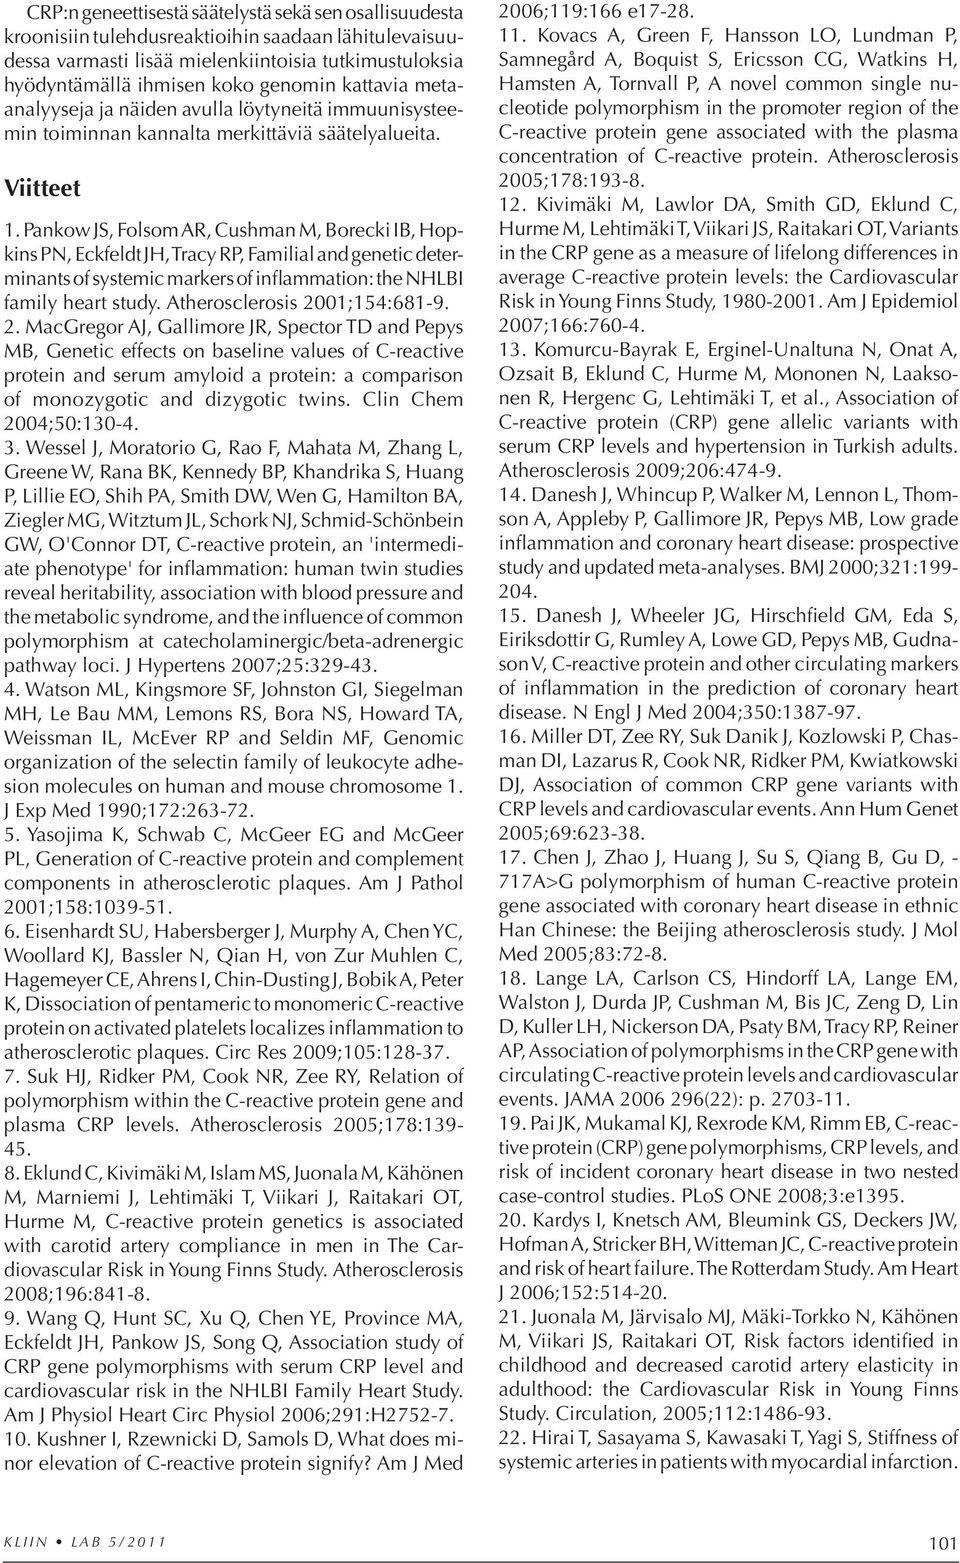 Pankow JS, Folsom AR, Cushman M, Borecki IB, Hopkins PN, Eckfeldt JH, Tracy RP, Familial and gene tic determinants of systemic markers of inflammation: the NHLBI family heart study.